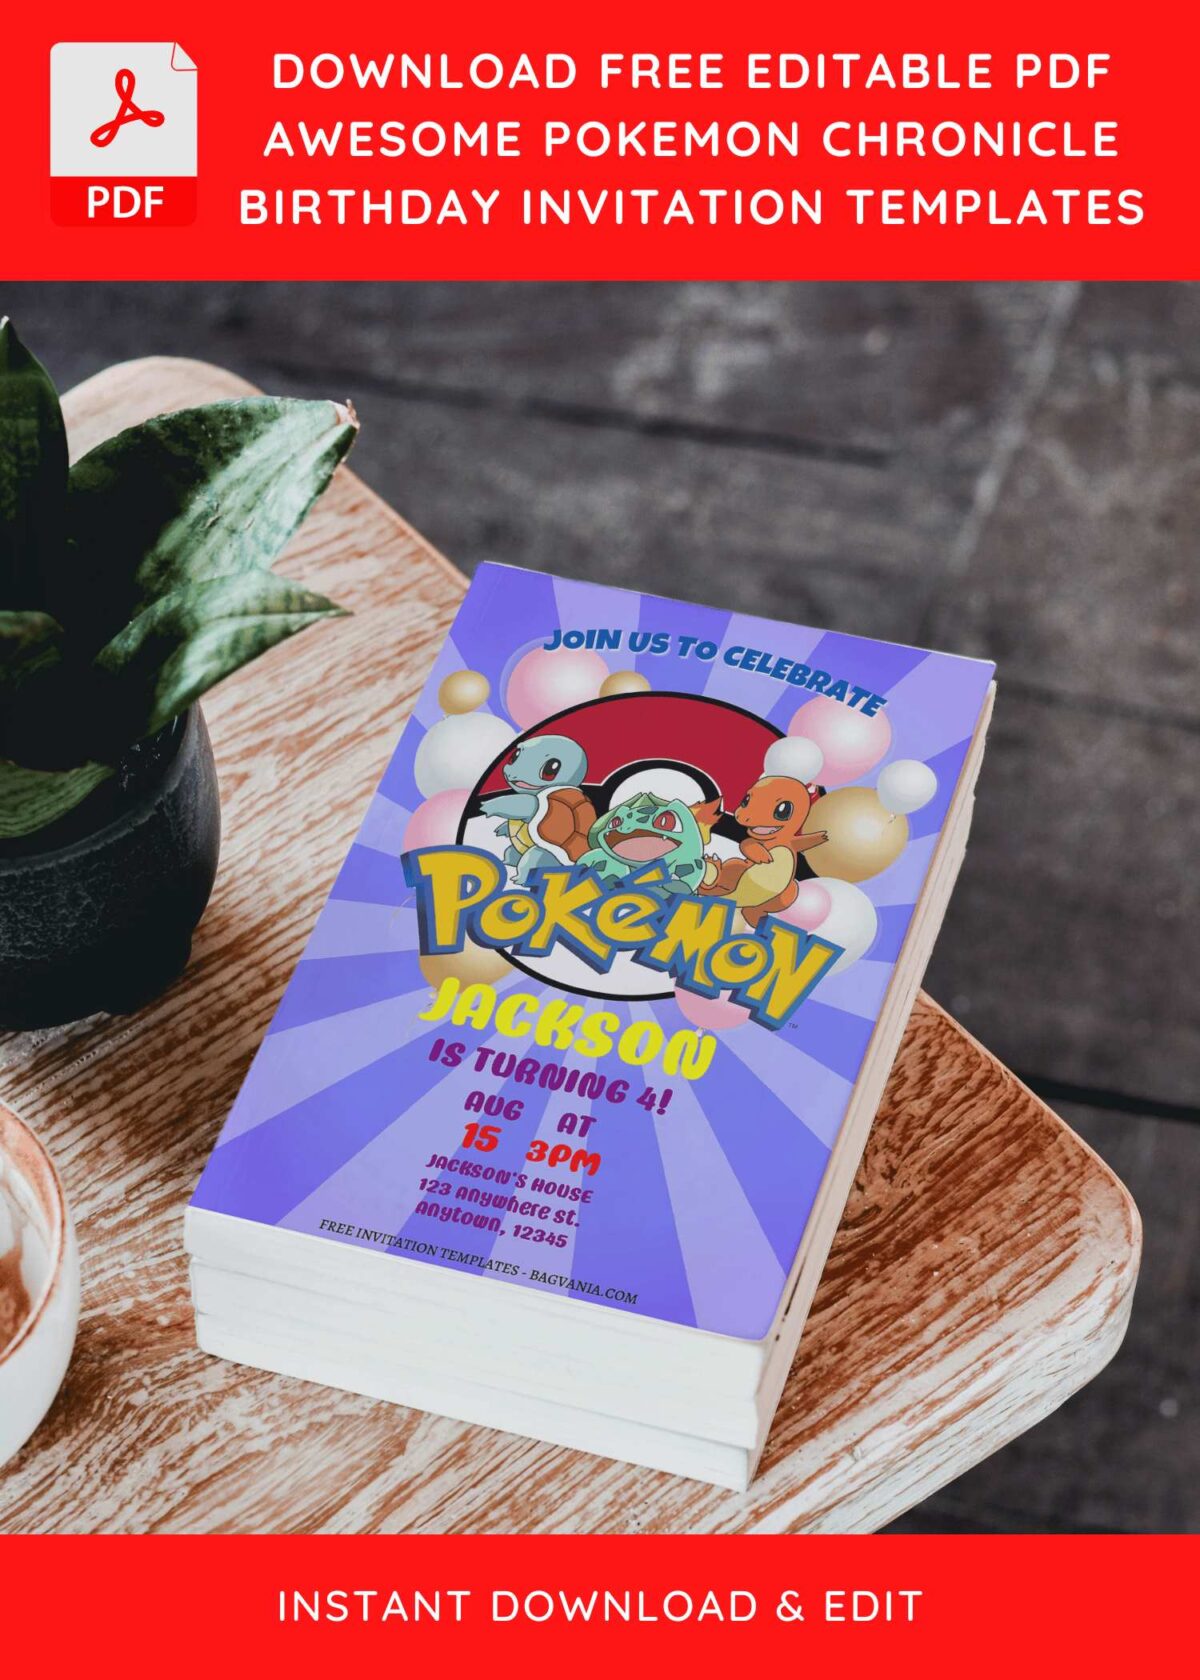 (Free Editable PDF) Epic Pokémon Chronicle Birthday Invitation Templates with comic sunburst backgrouond